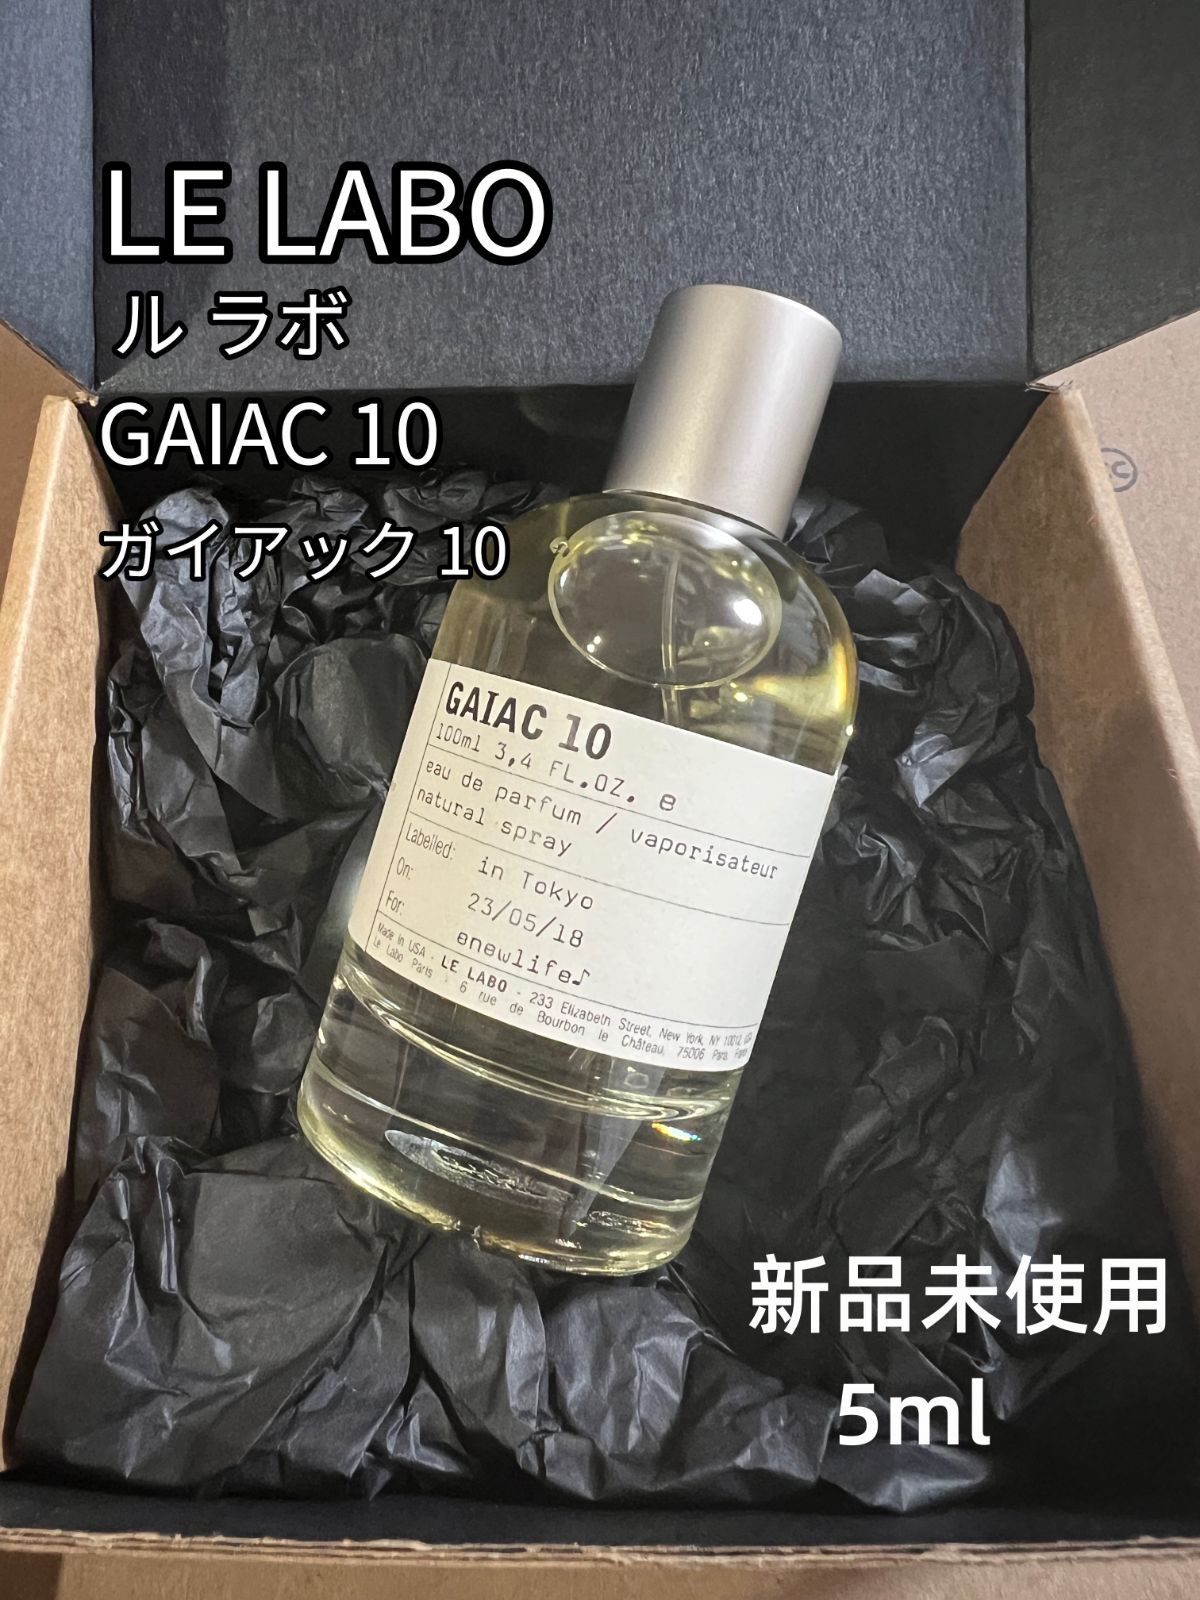 LELABO GAIAC10 100ml ルラボ ガイアック10香水 - ユニセックス